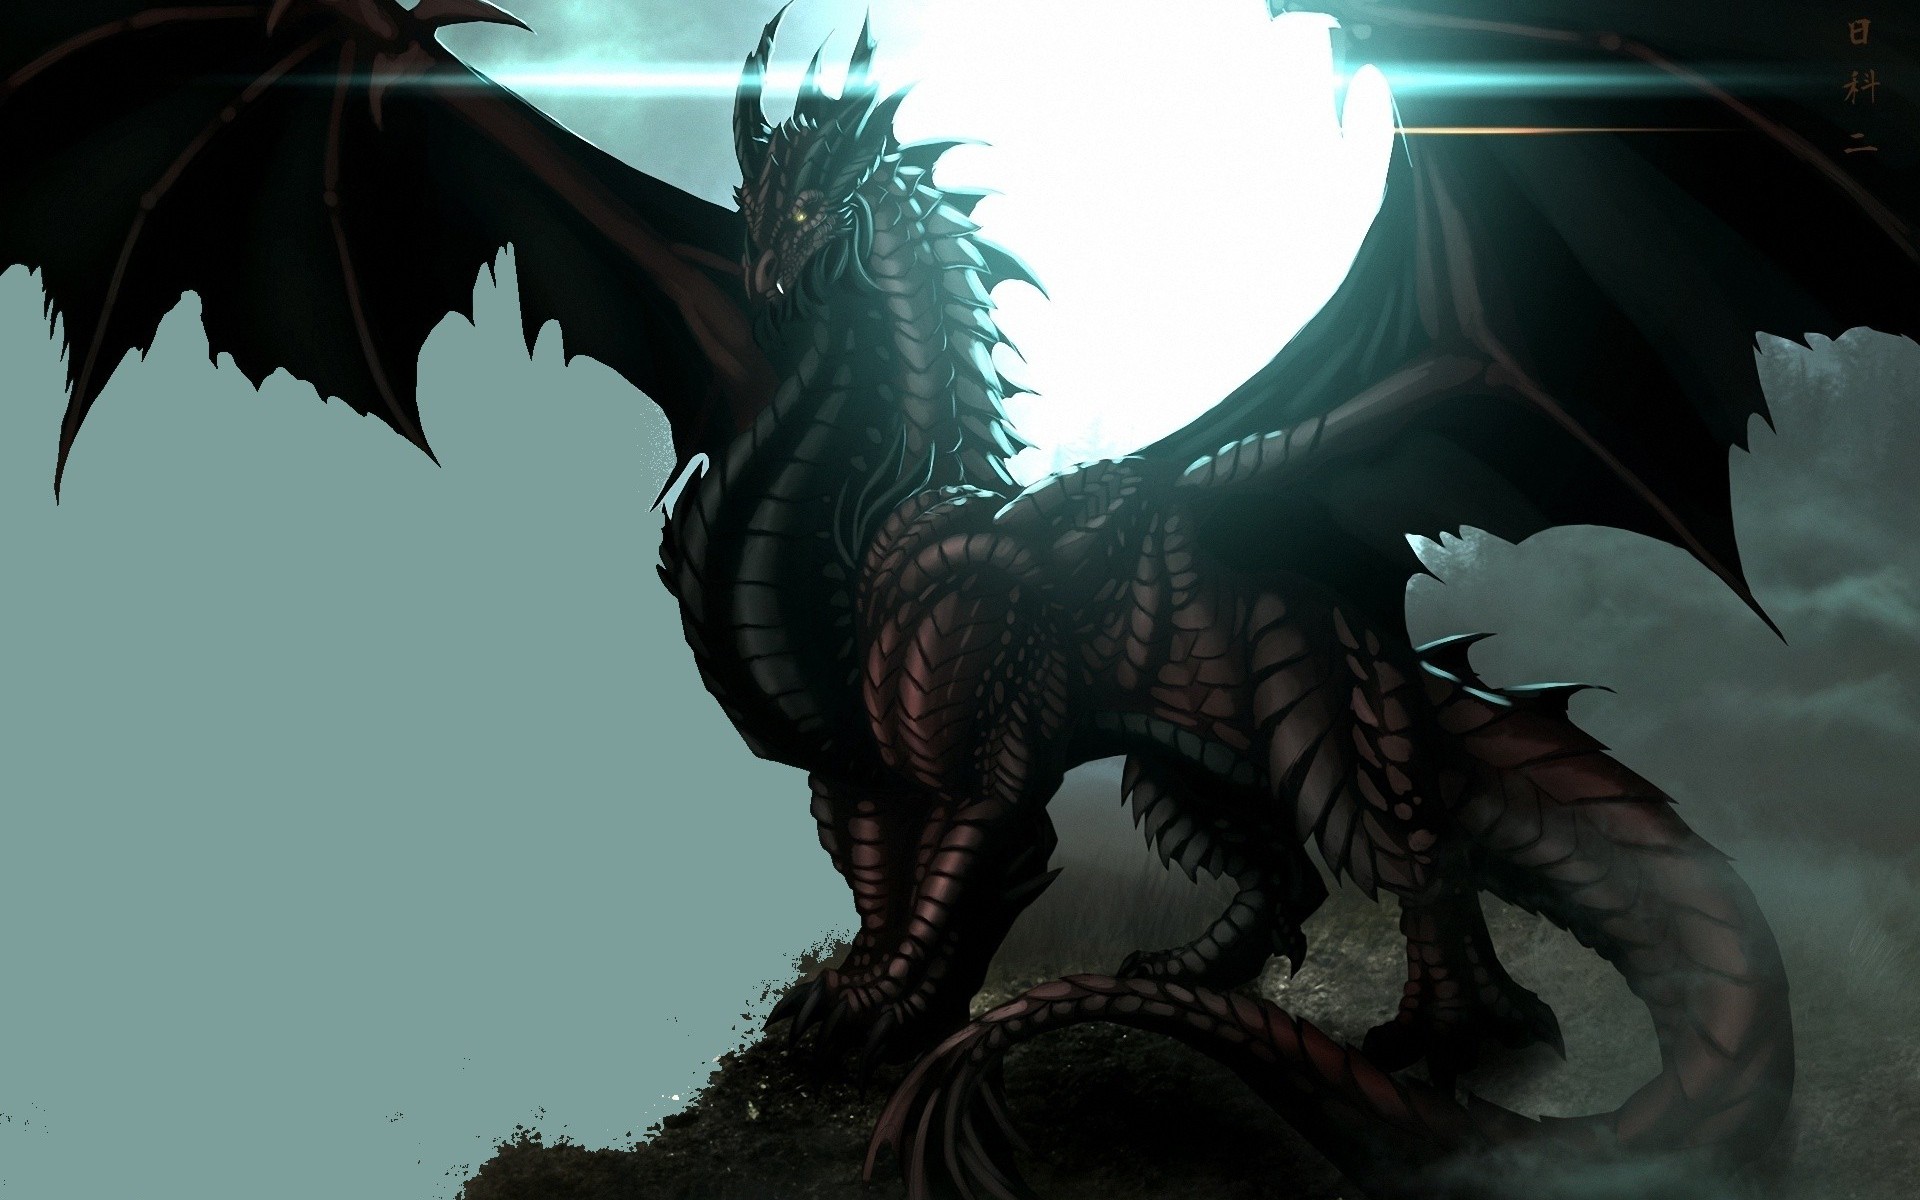 i am king wallpaper,dragon,cg artwork,fictional character,mythical creature,green dragon